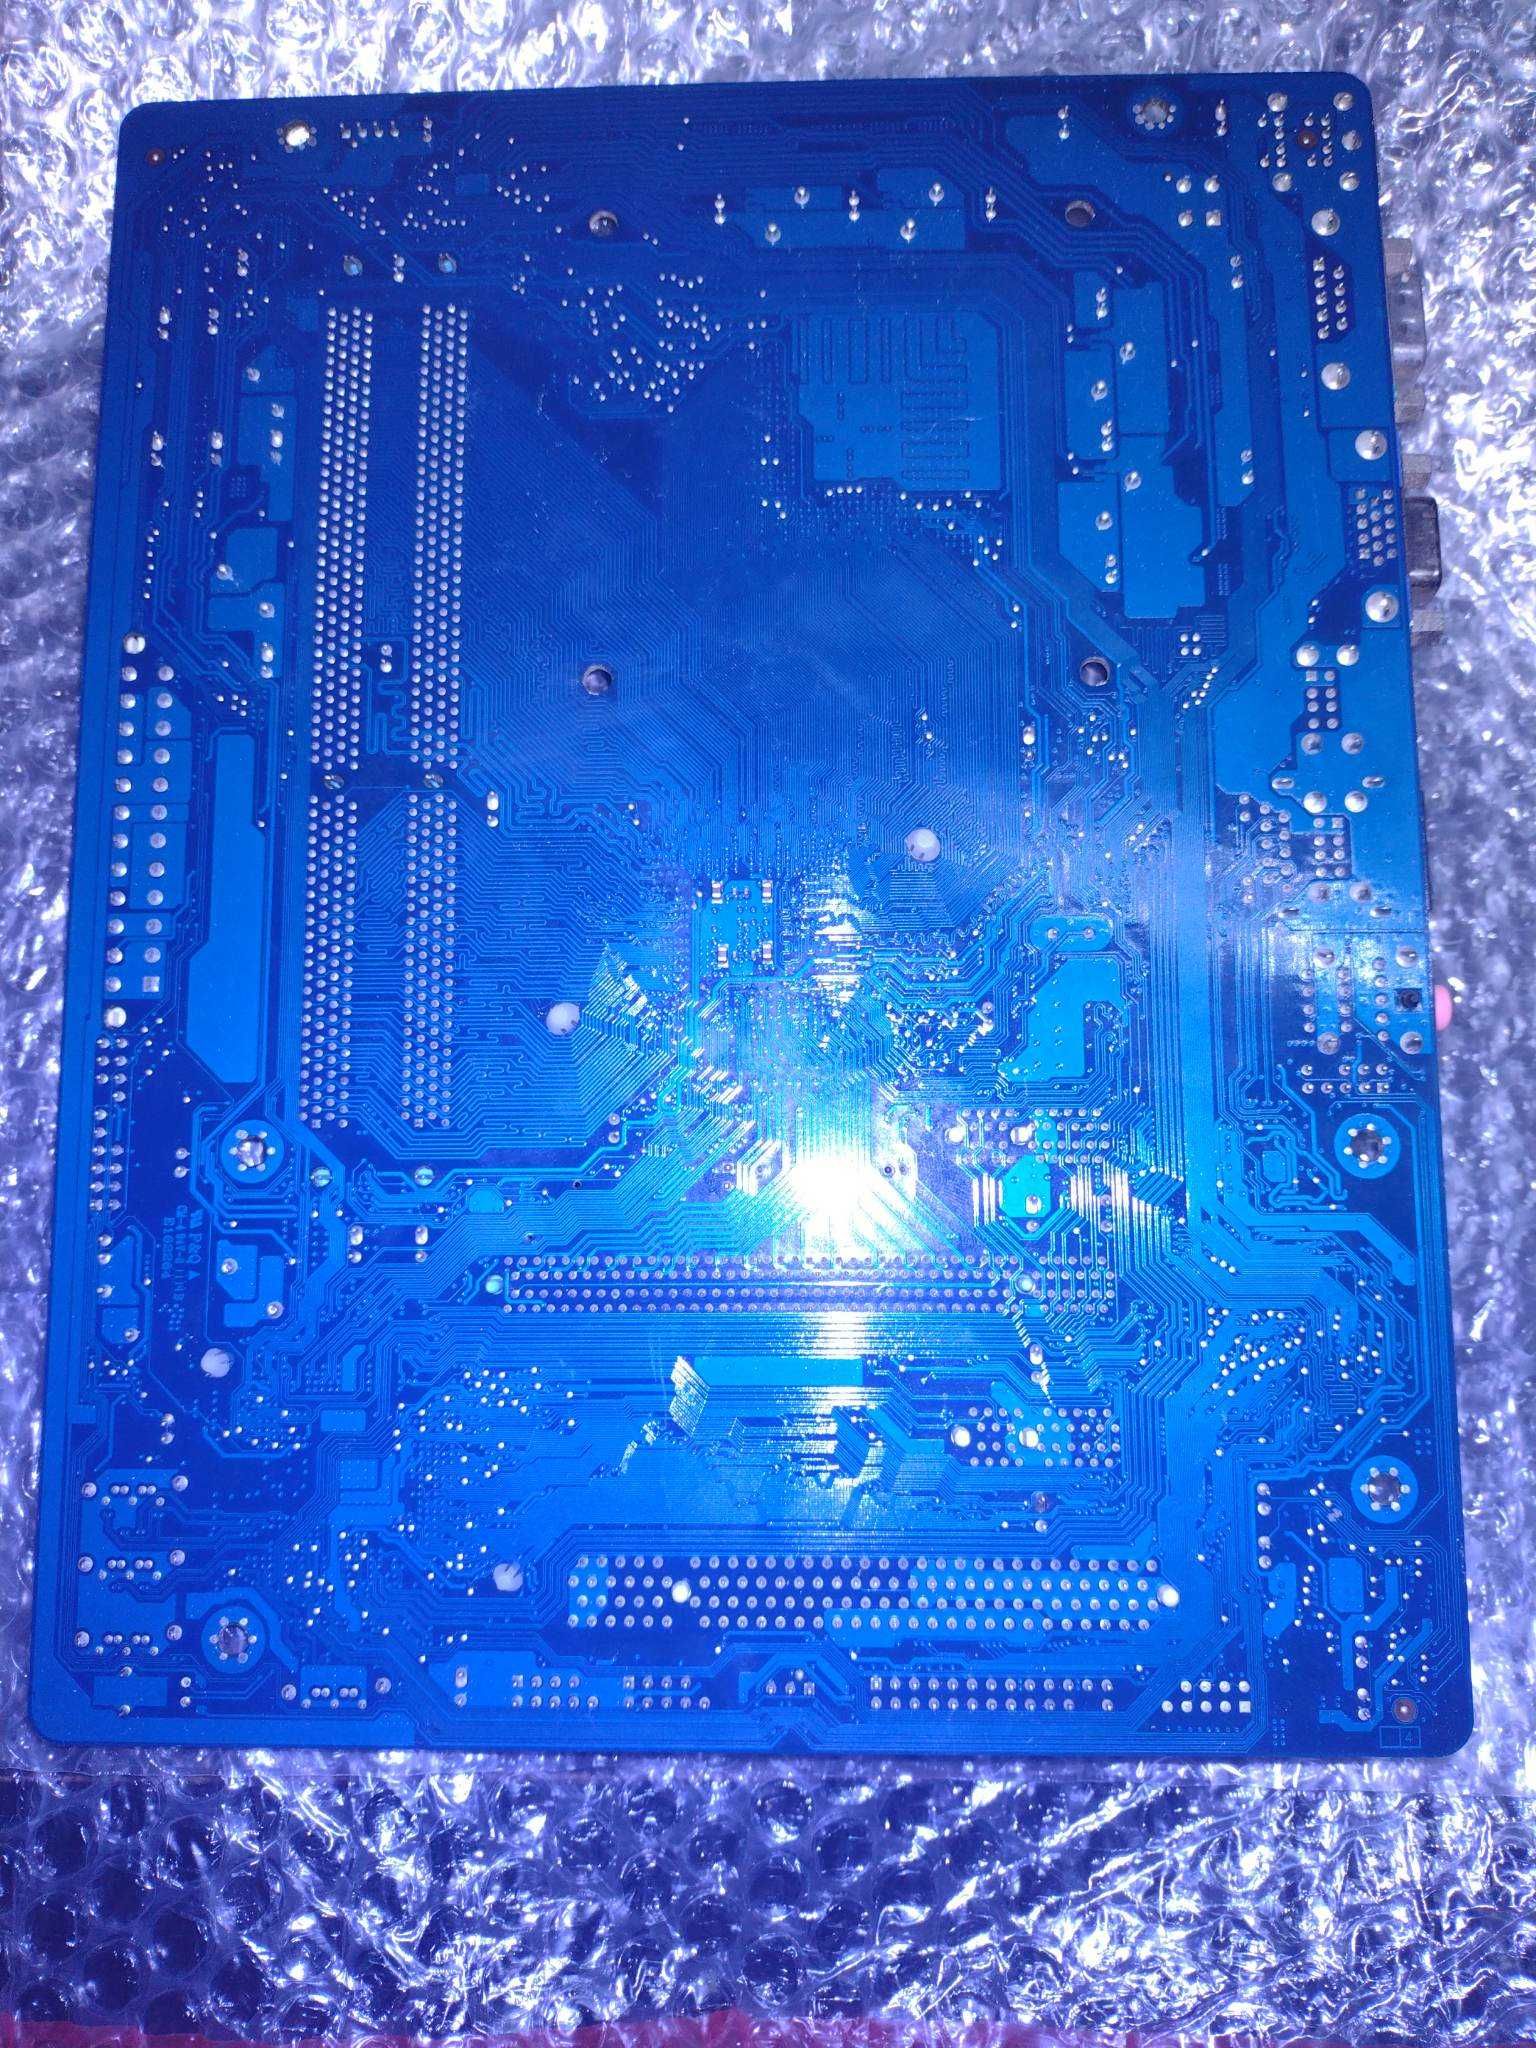 Placa de baza GIGABYTE G41MT-S2P DDR3 Intel